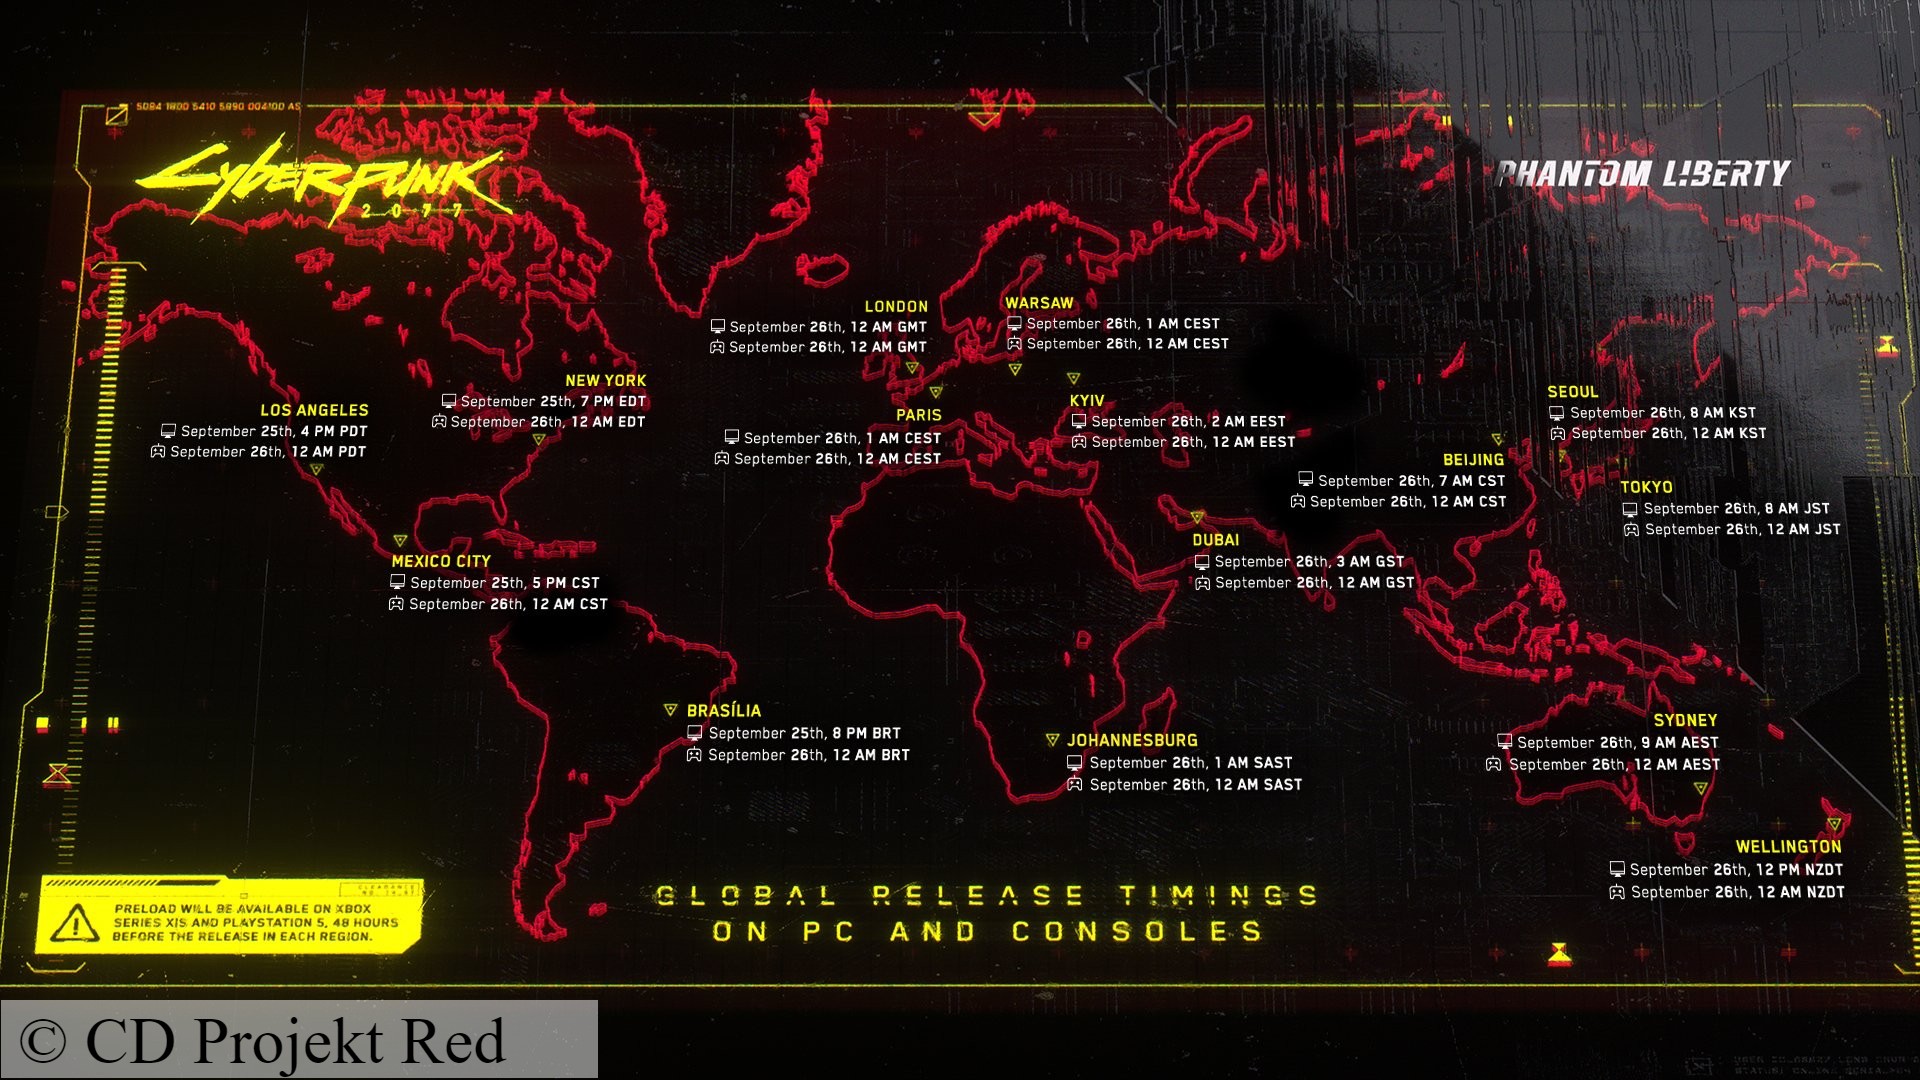 Cyberpunk 2077 Phantom Liberty release times: A map showing release times for RPG game Cyberpunk 2077 Phantom Liberty